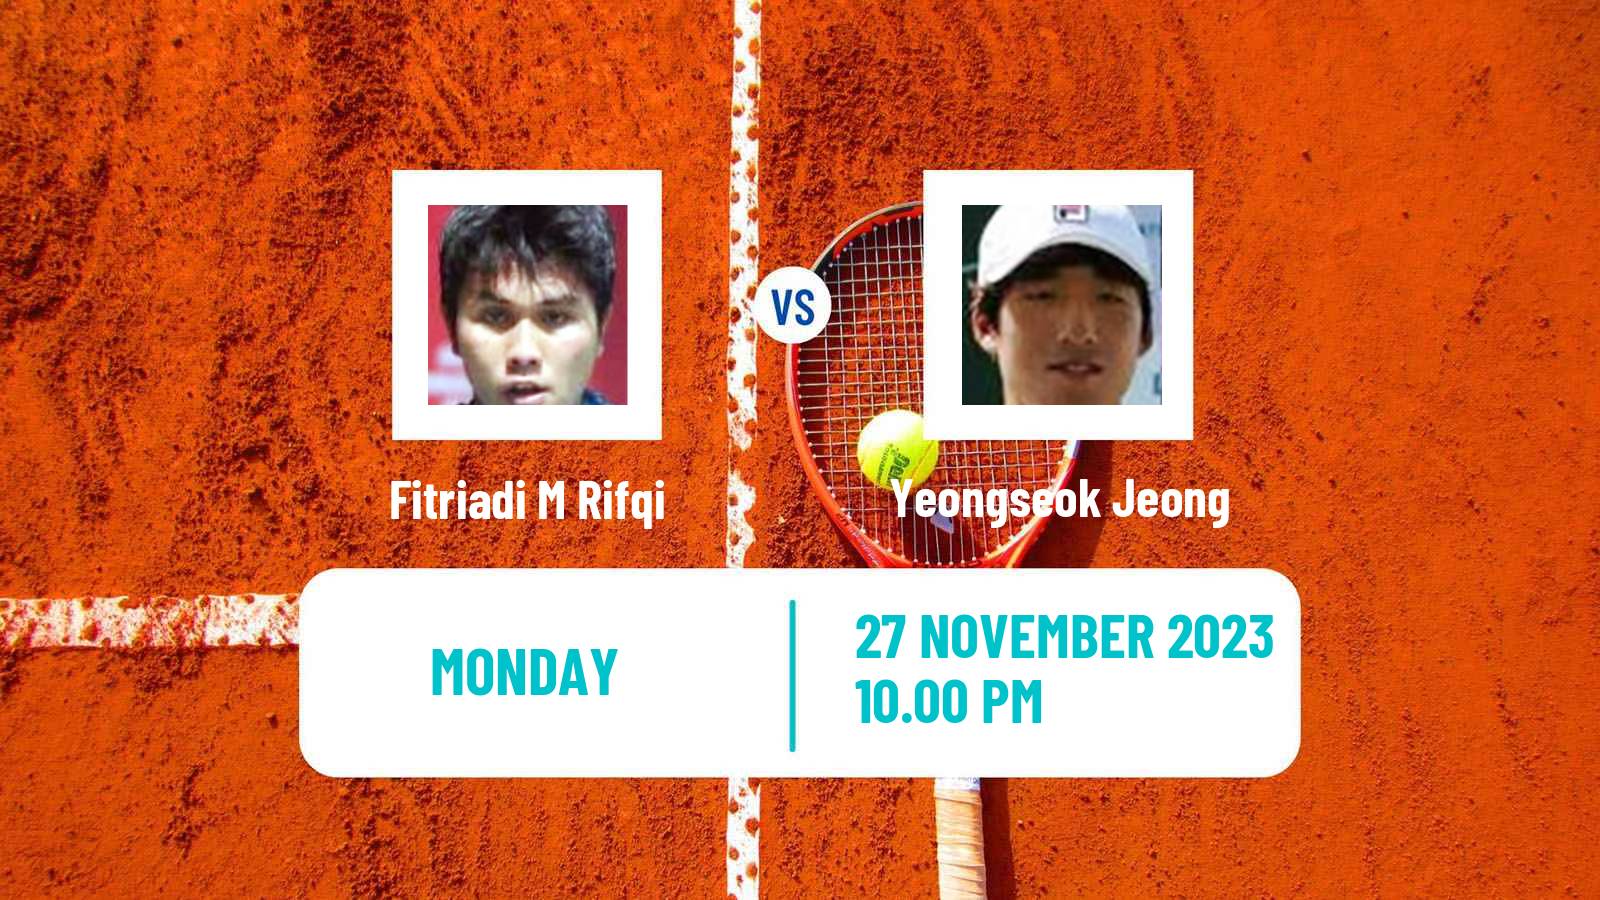 Tennis ITF M15 Kuala Lumpur Men 2023 M Rifqi Fitriadi - Yeongseok Jeong